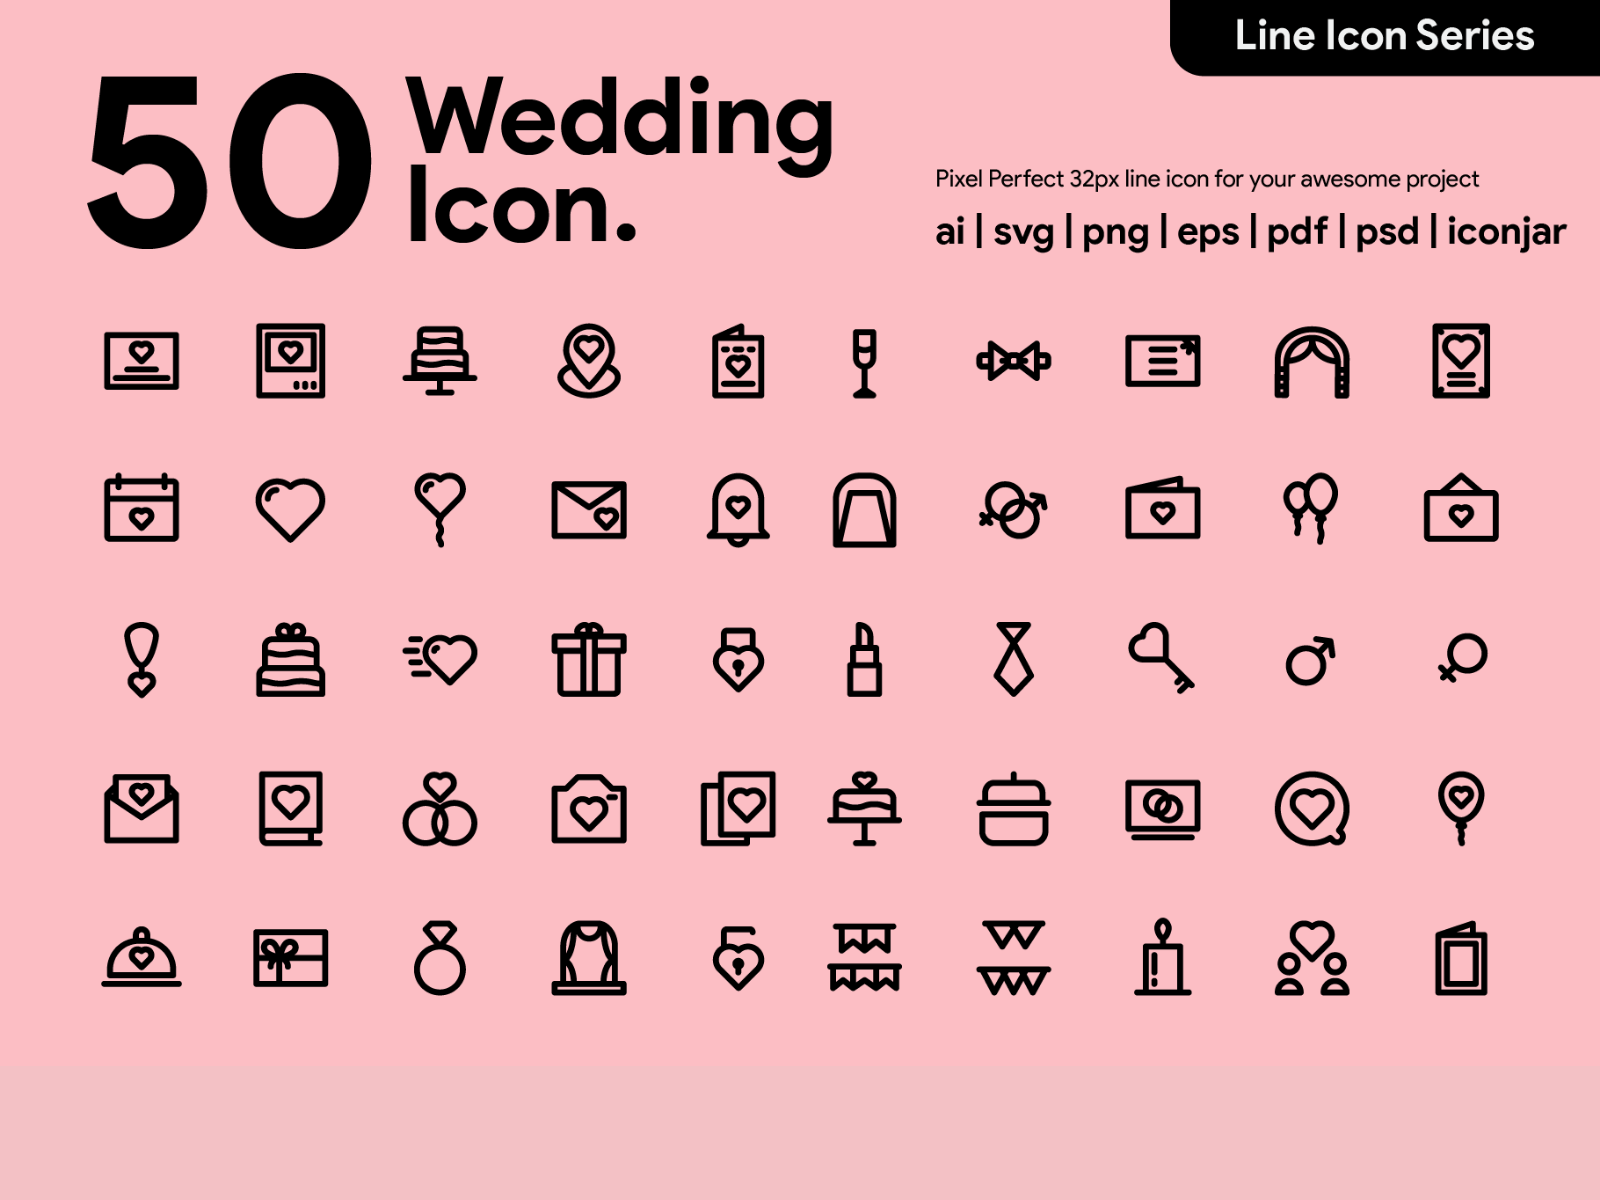 App icons design idea #281: Kawaicon - 50 Wedding Line Icons